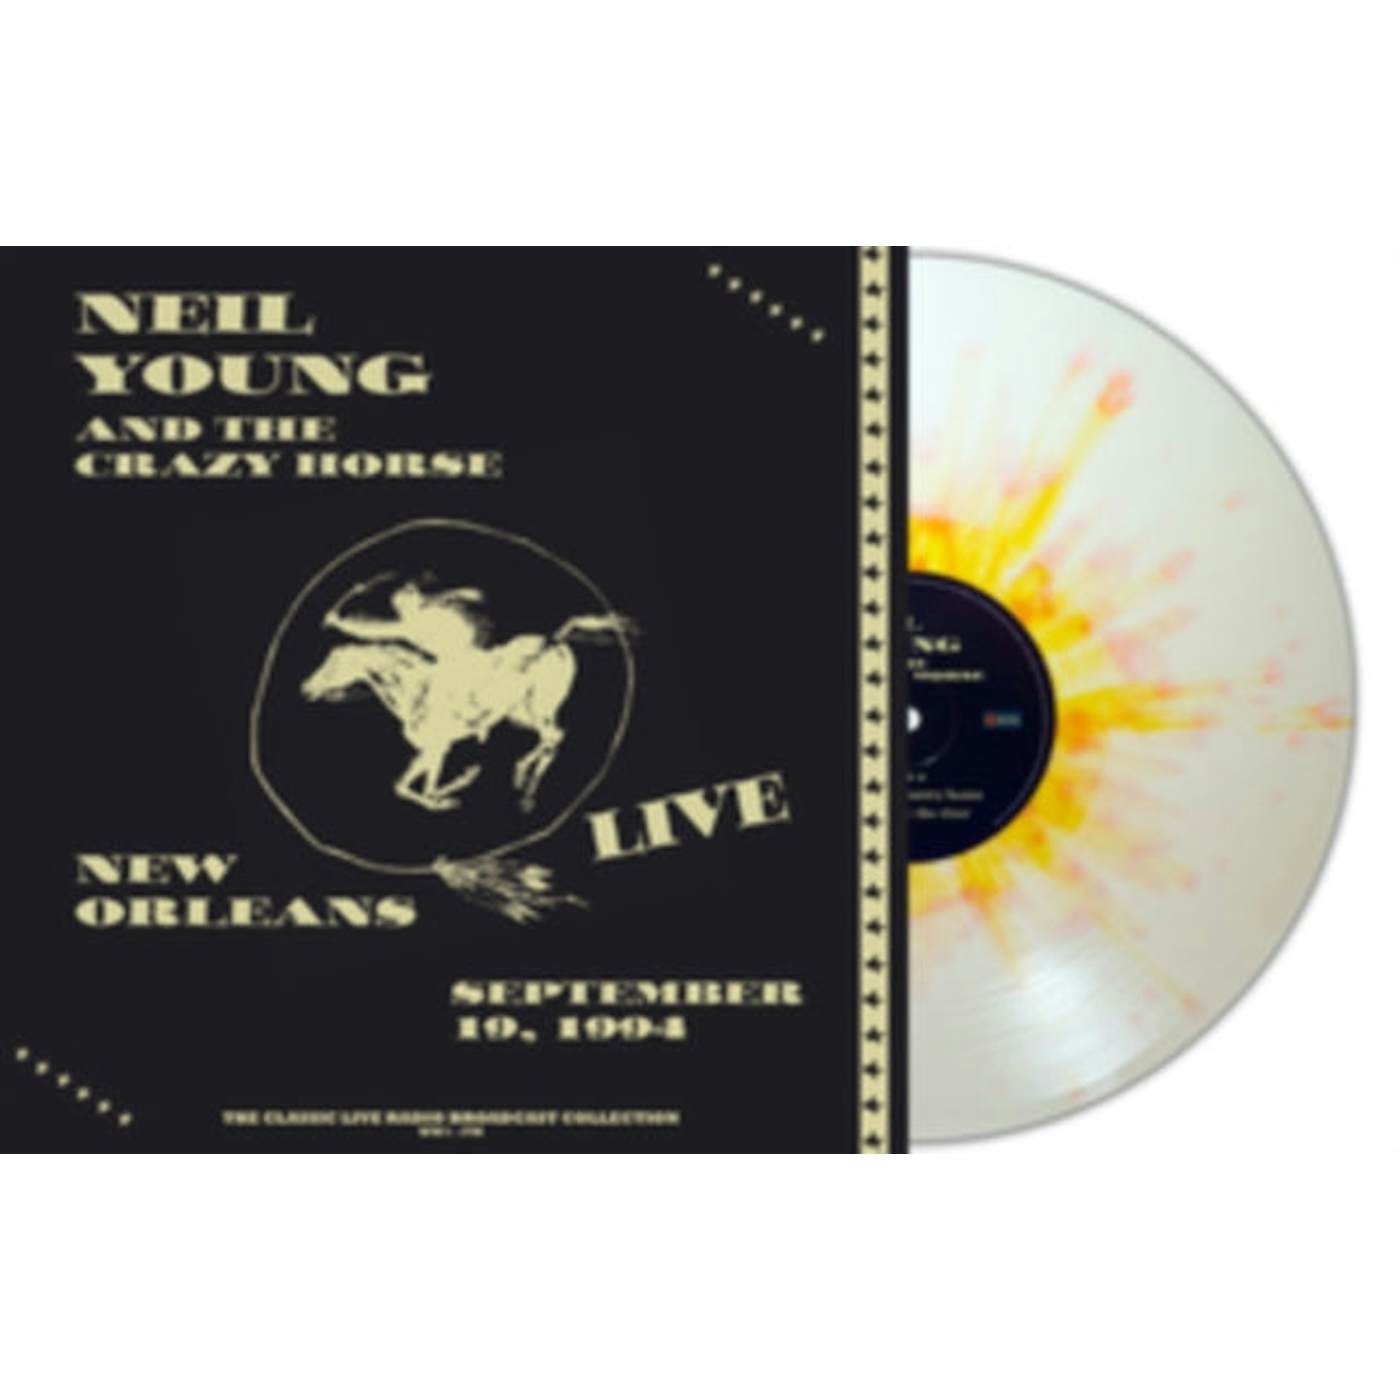 Neil Young & Crazy Horse LP - Live In New Orleans 1994 (White/Orange Splatter Vinyl)